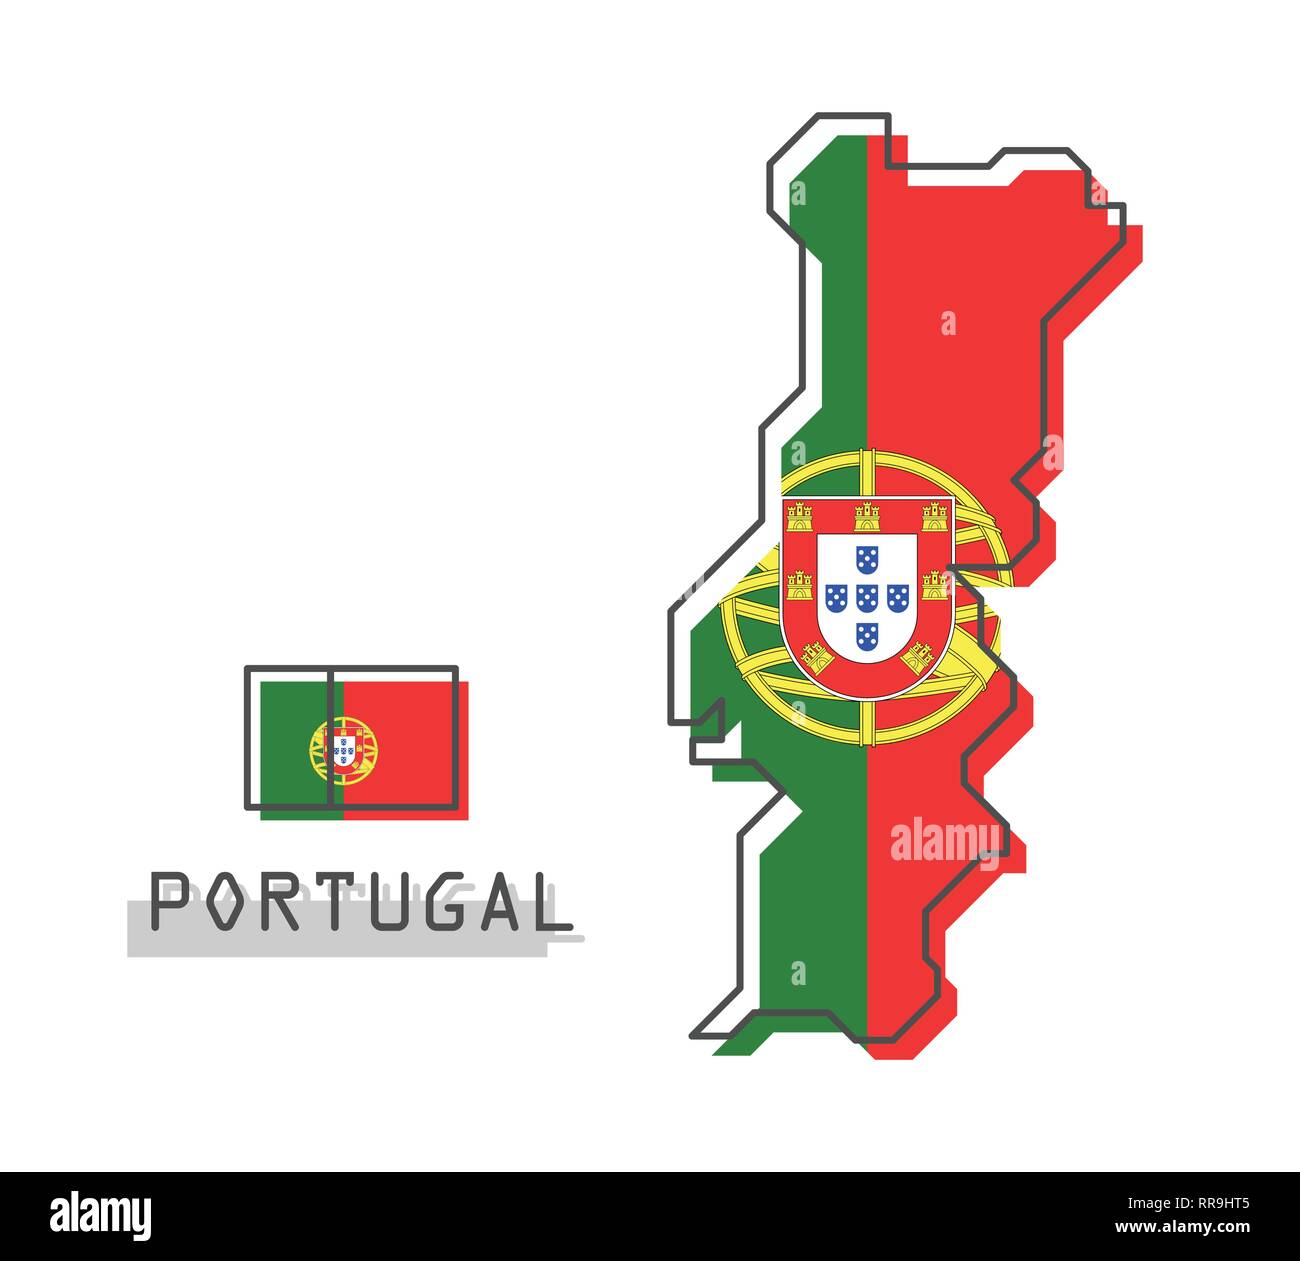 Portugal Karte und Flagge. Moderne, einfache Linie cartoon Design. Vektor. Stock Vektor